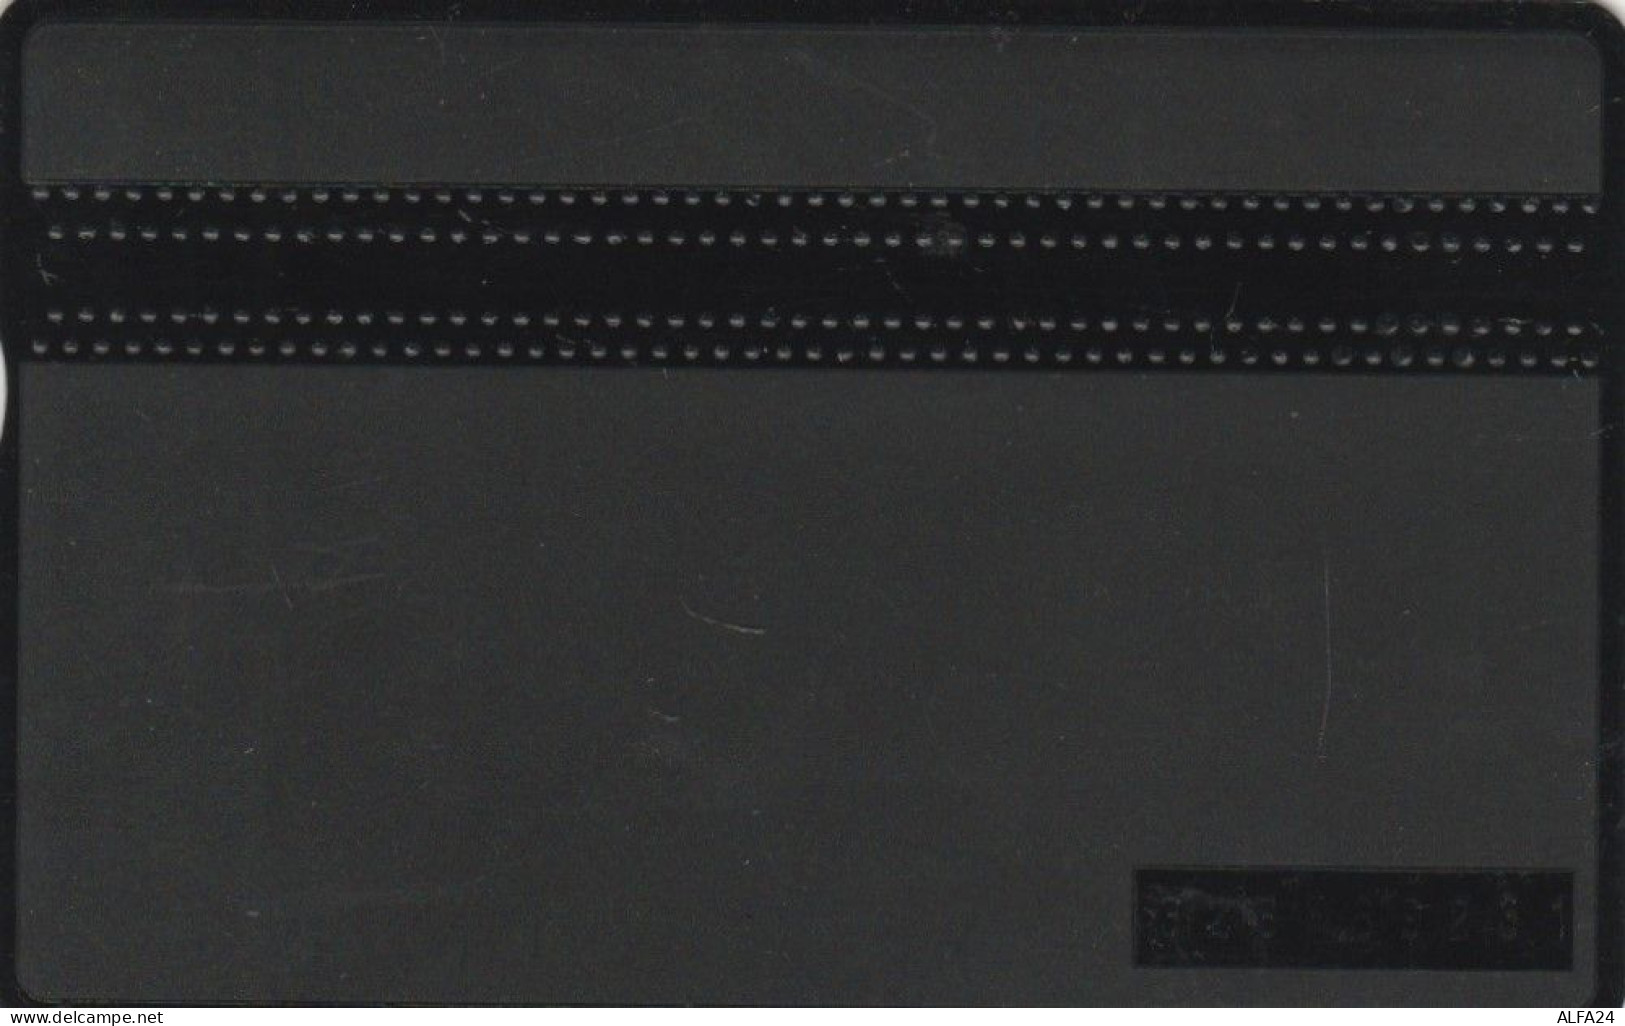 PHONE CARD BELGIO LANDIS (M.57.7 - Senza Chip